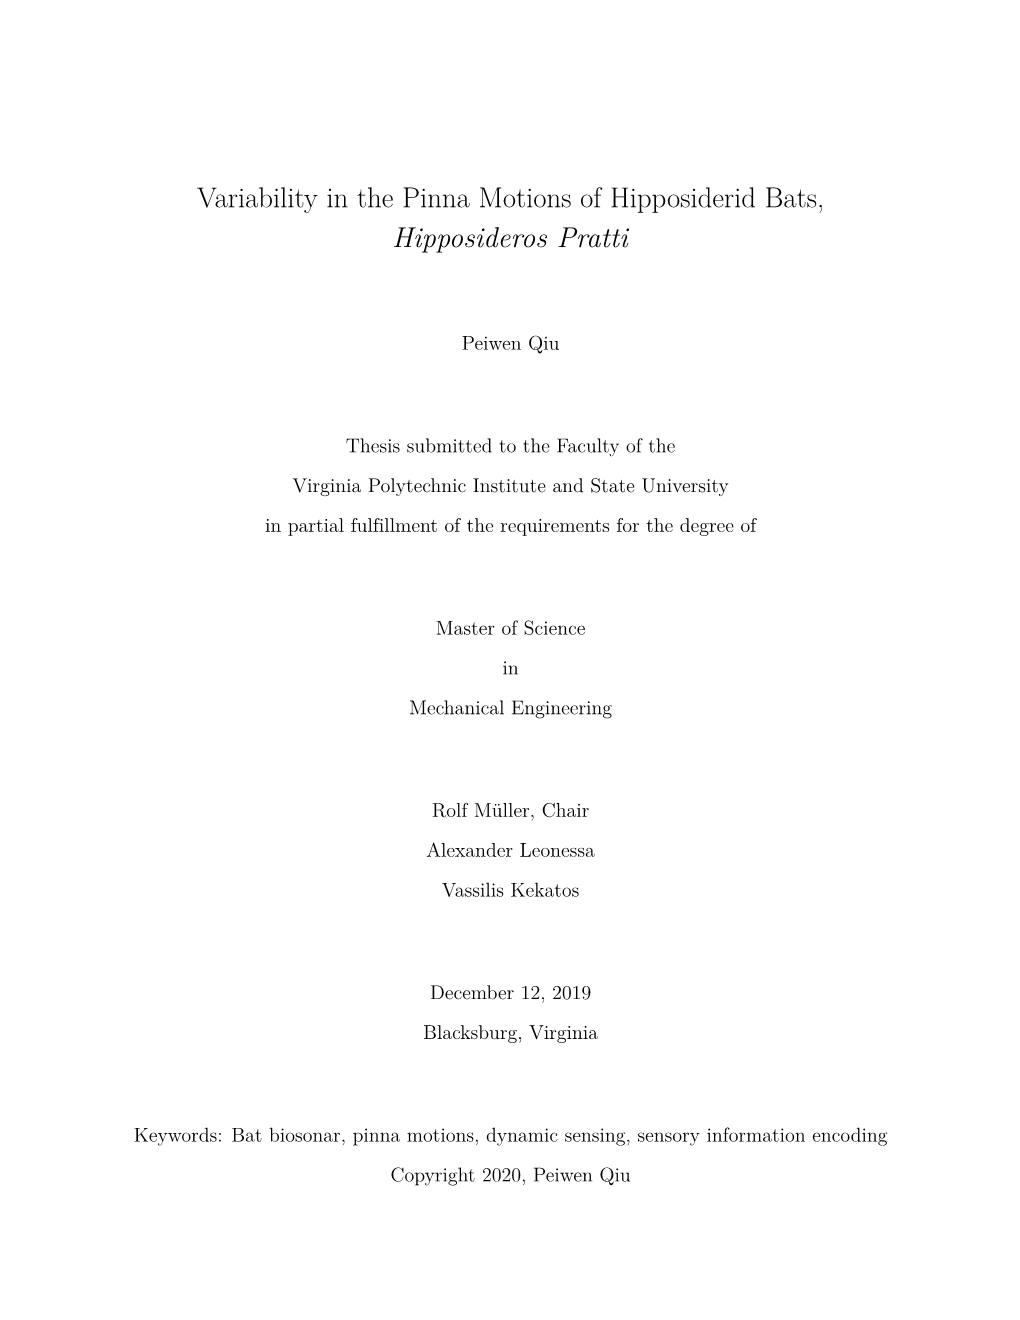 Variability in the Pinna Motions of Hipposiderid Bats, Hipposideros Pratti